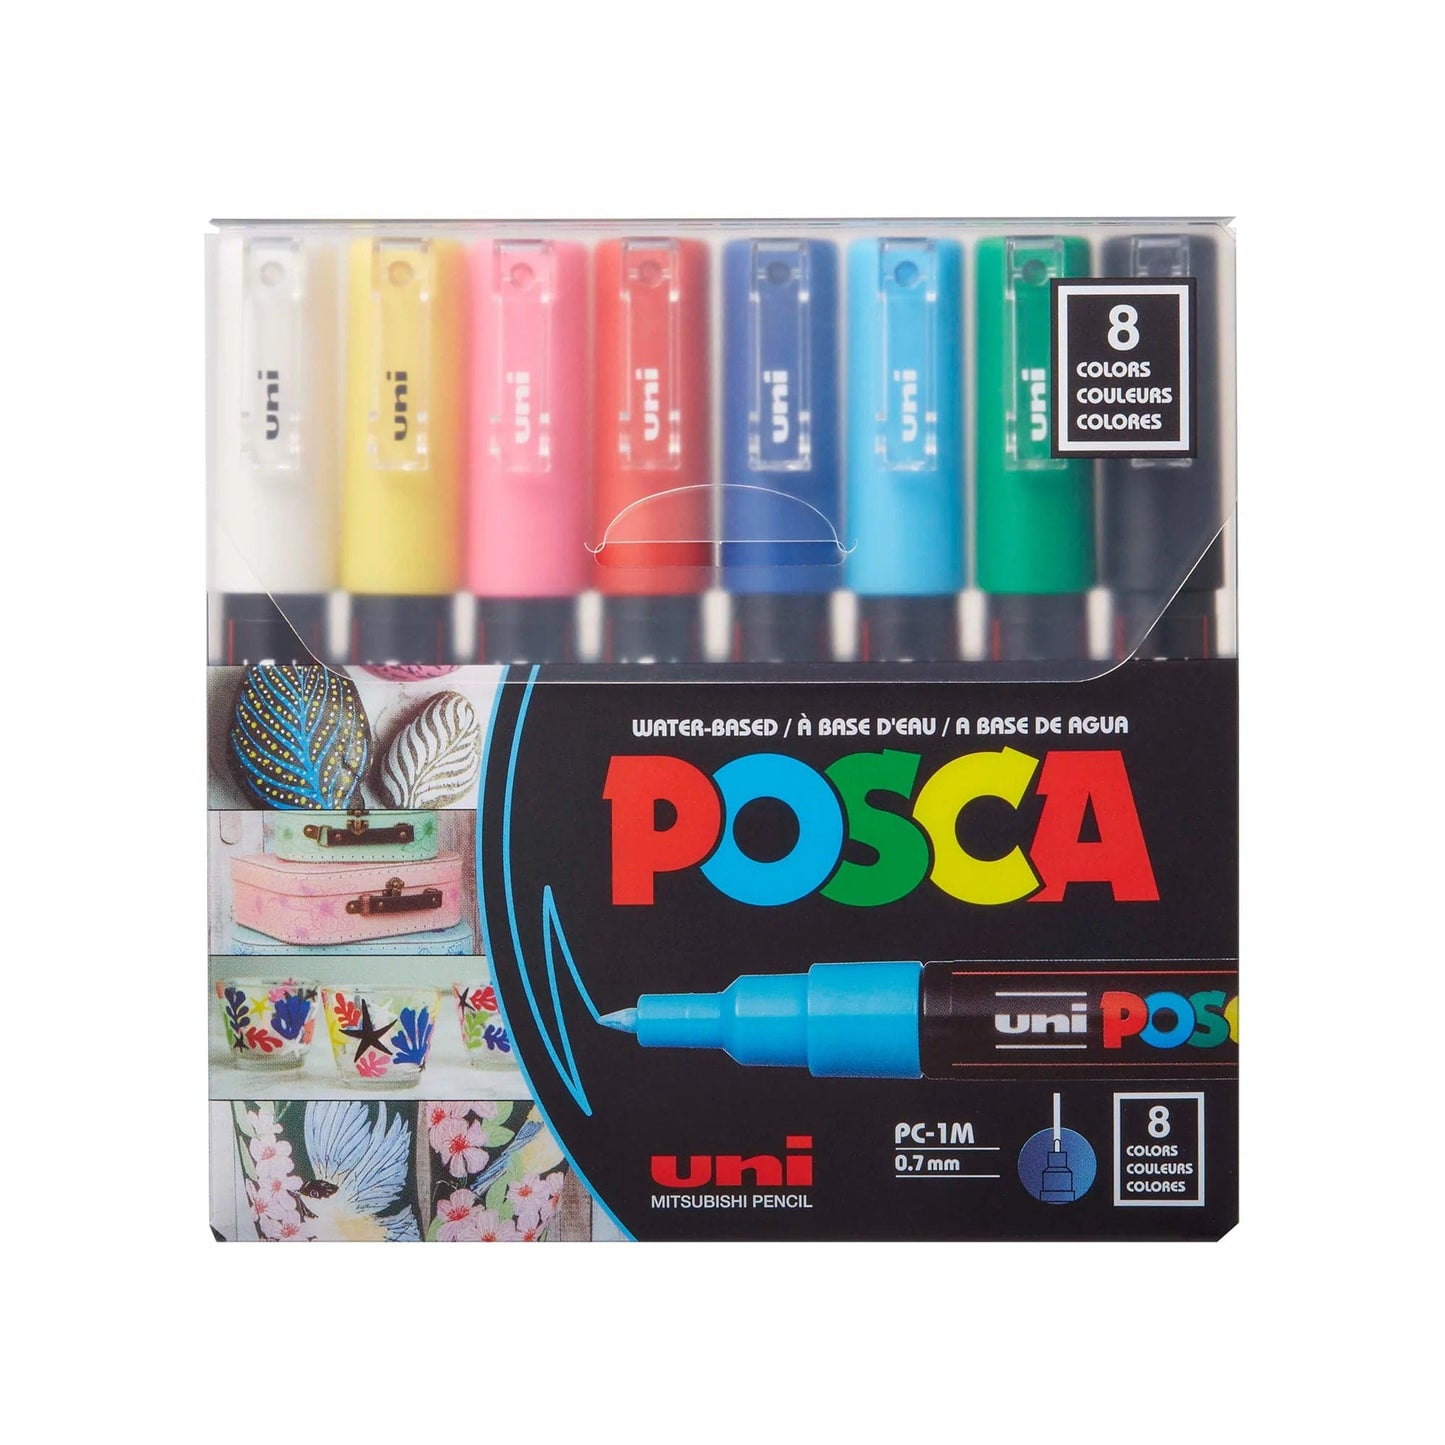 UNI MITSUBISHI PENCIL CO POSCA MARKER SET Uni - Posca - Paint Marker Set - 8 Pieces - Basic Colours - Extra-Fine Tapered Point - PC-1M